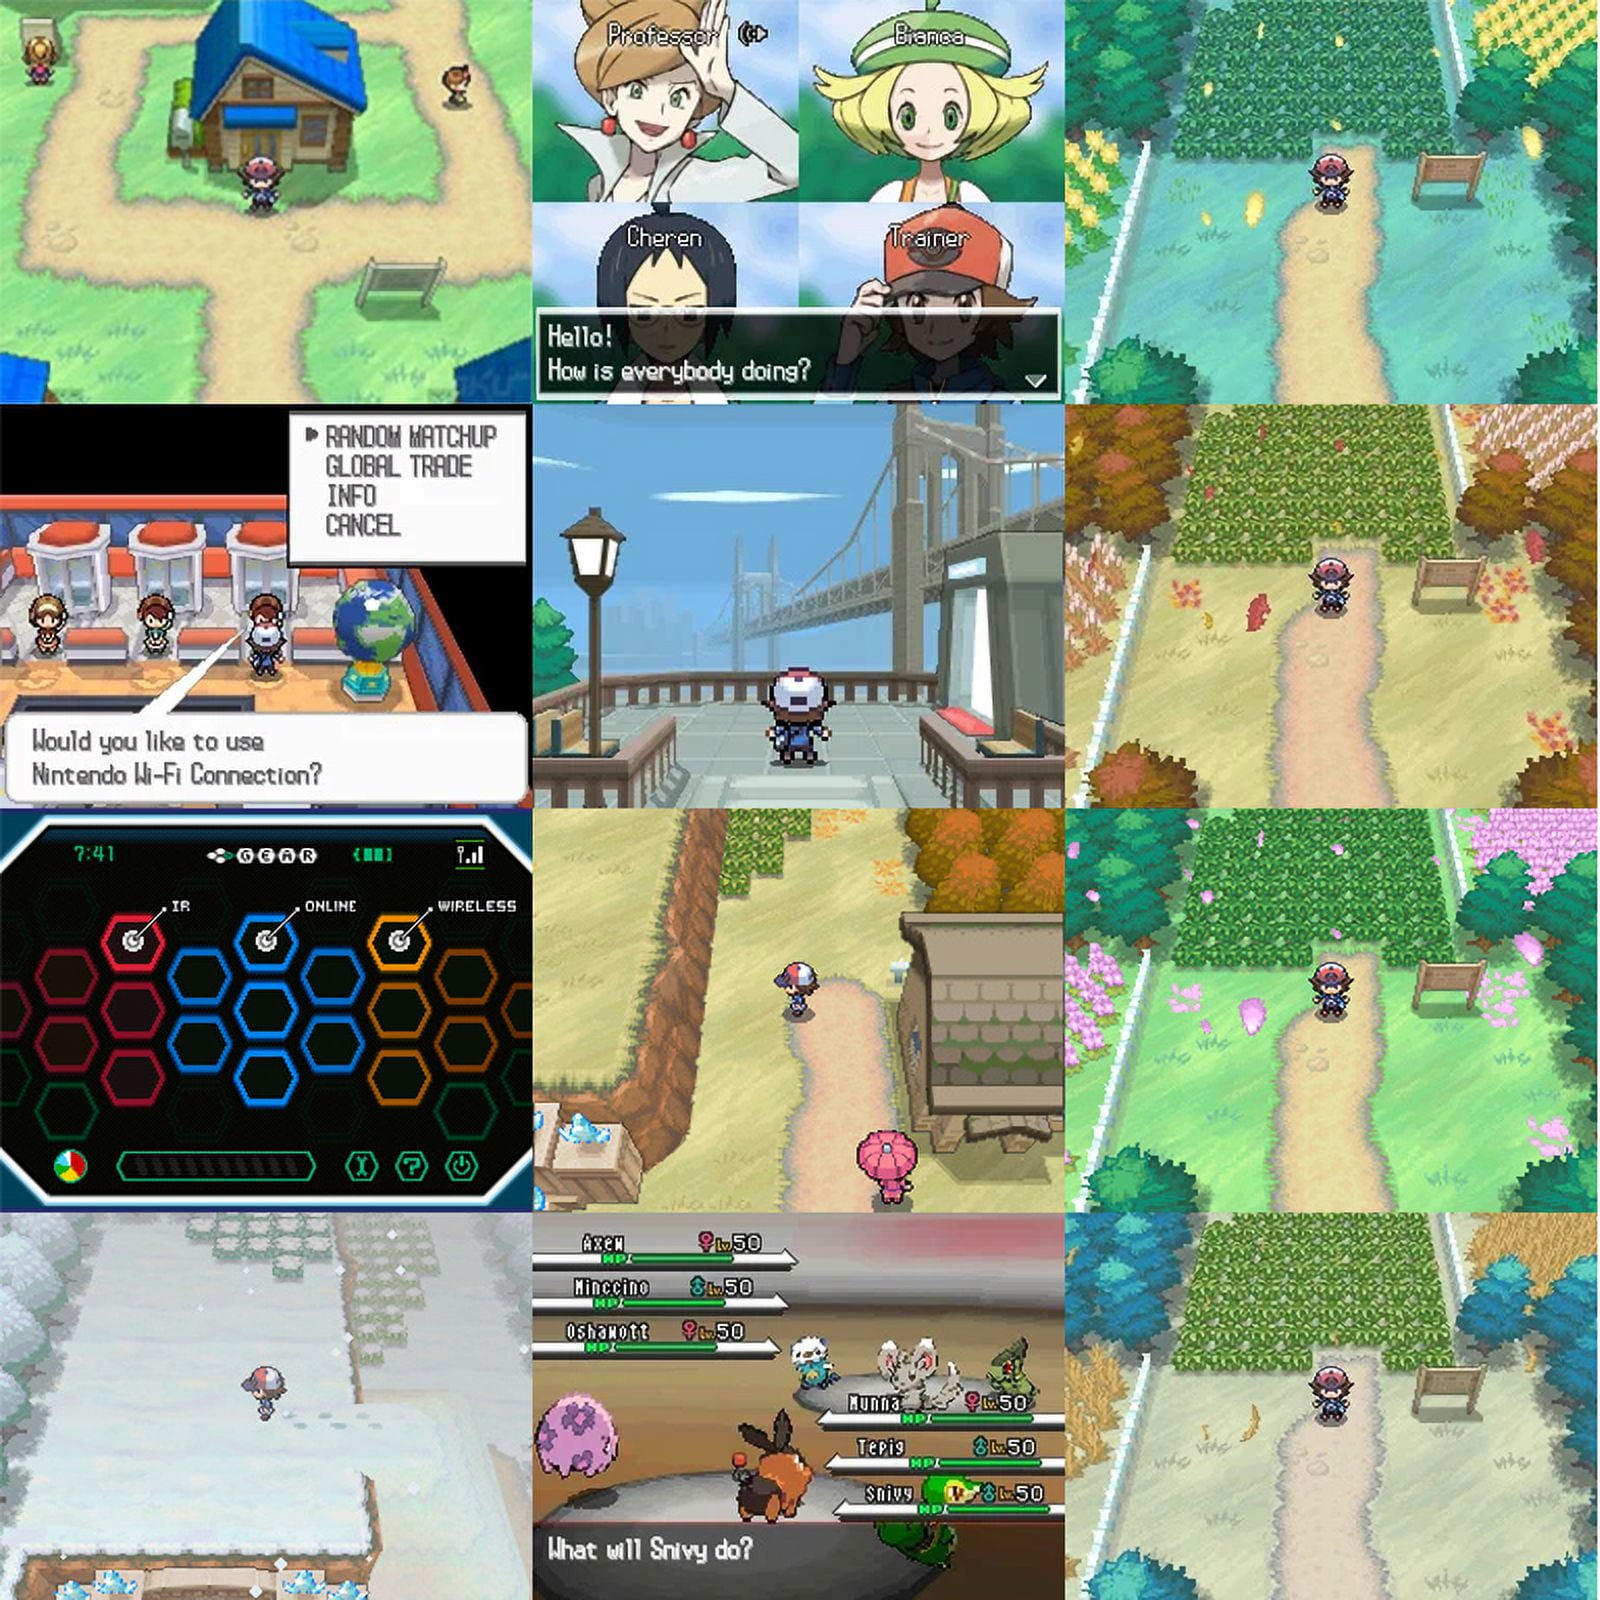 Review: Pokemon Black/White (Nintendo DS) - Geeks Under Grace